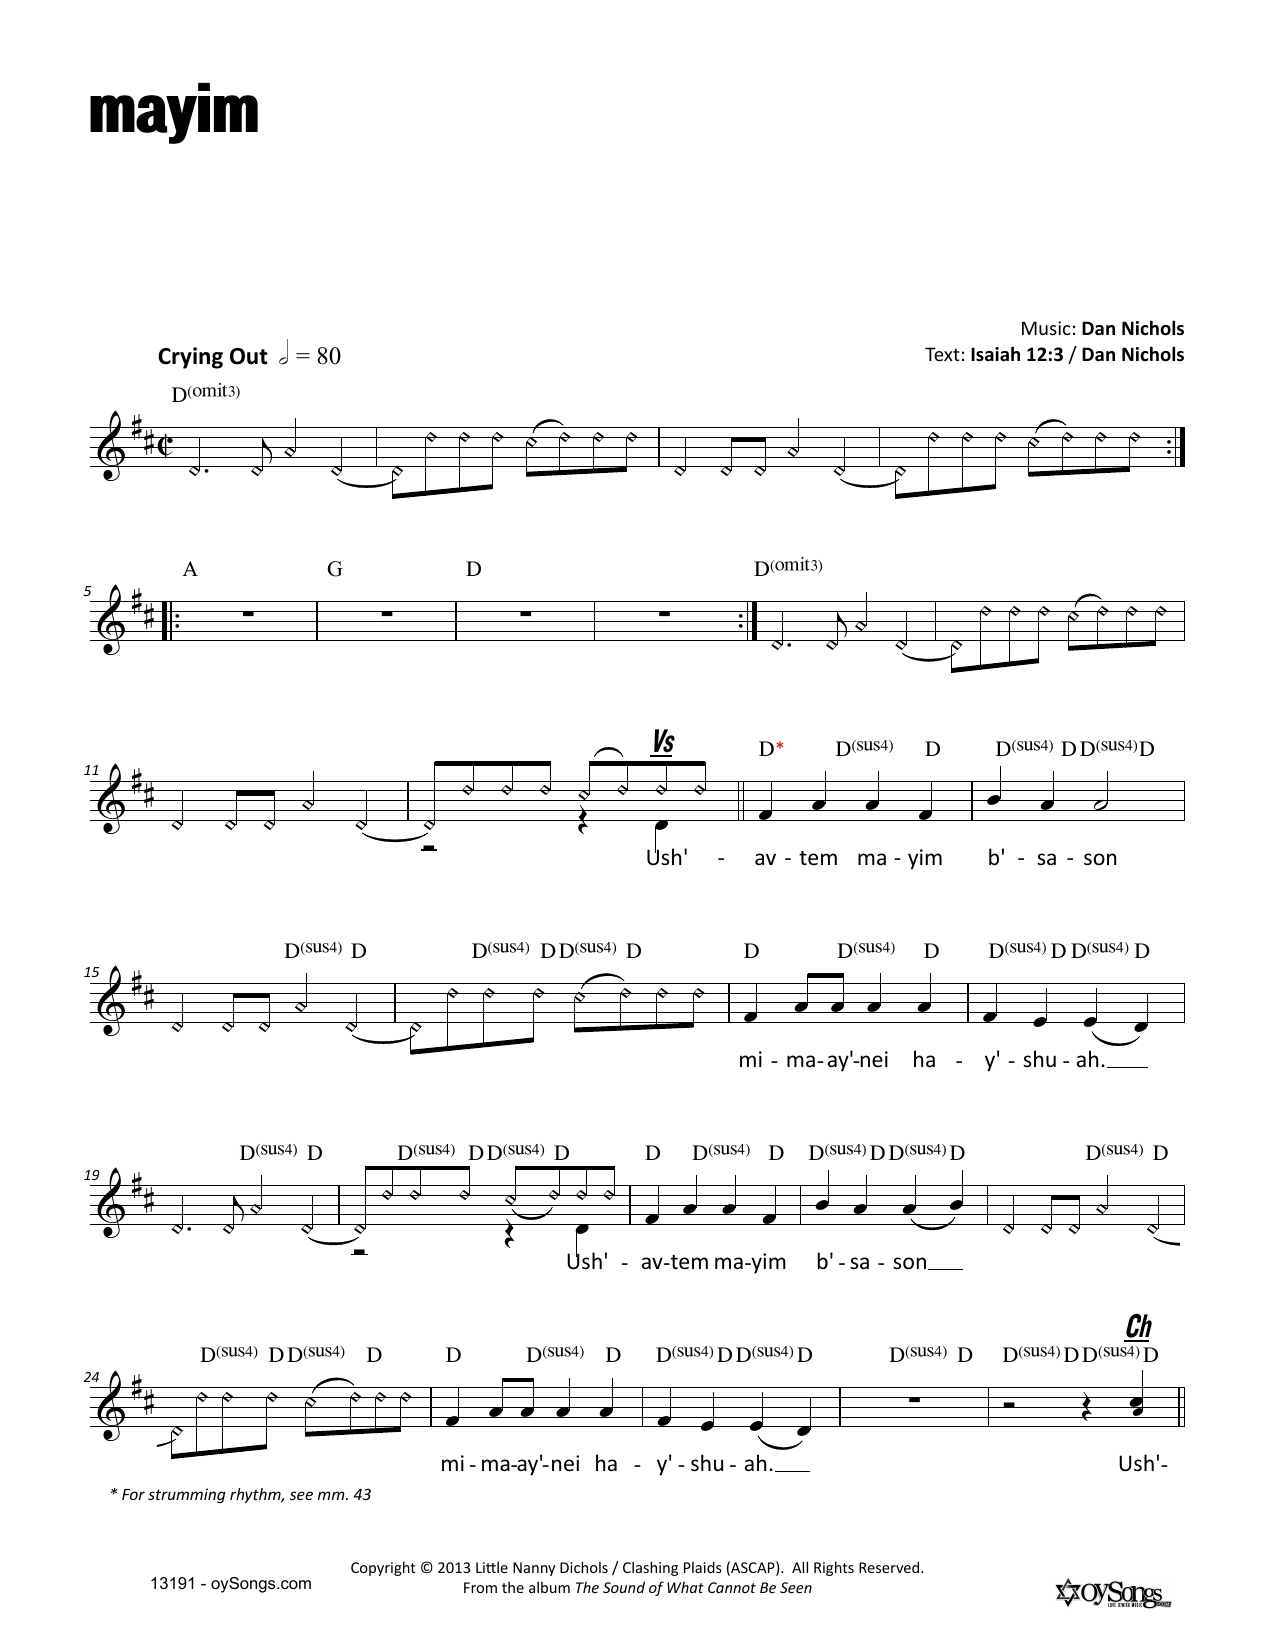 Dan Nichols Mayim Sheet Music Notes & Chords for Melody Line, Lyrics & Chords - Download or Print PDF